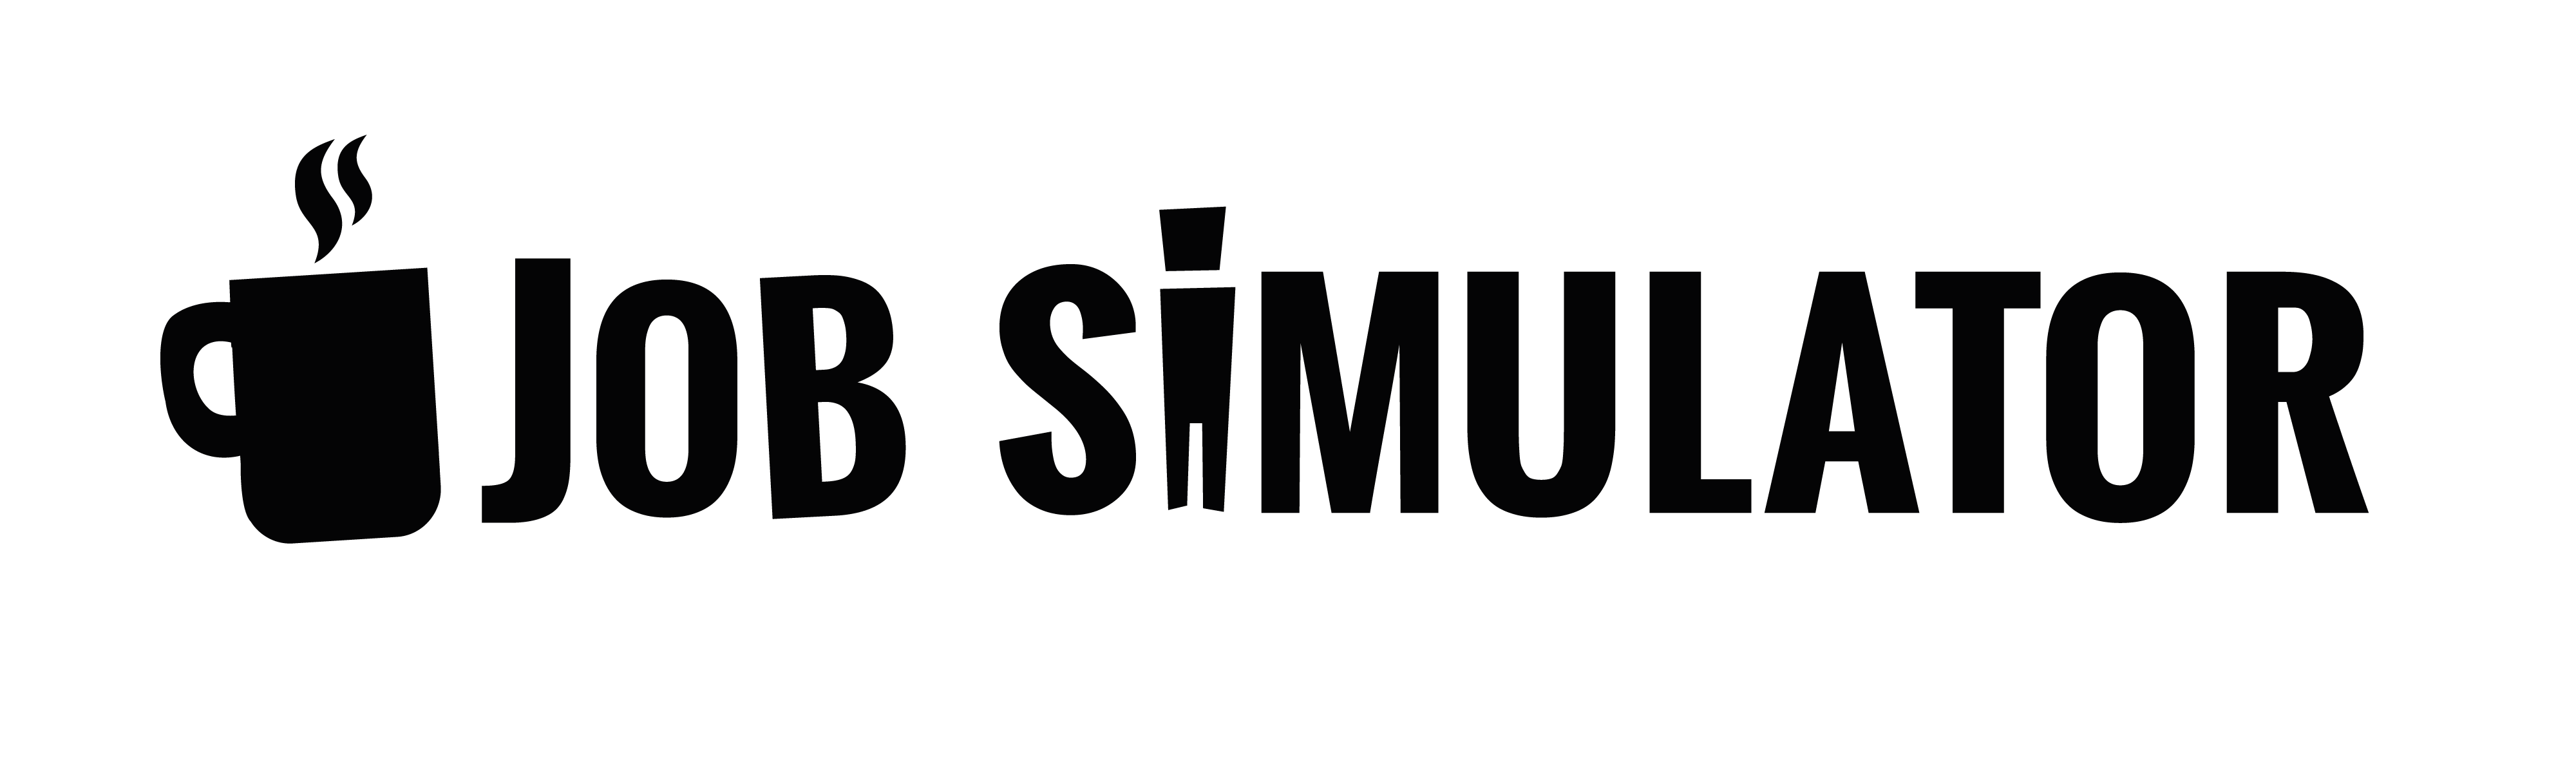 Simulator Logo - Owlchemy Labs Brand & Logo Usage Guidelines | Owlchemy Labs